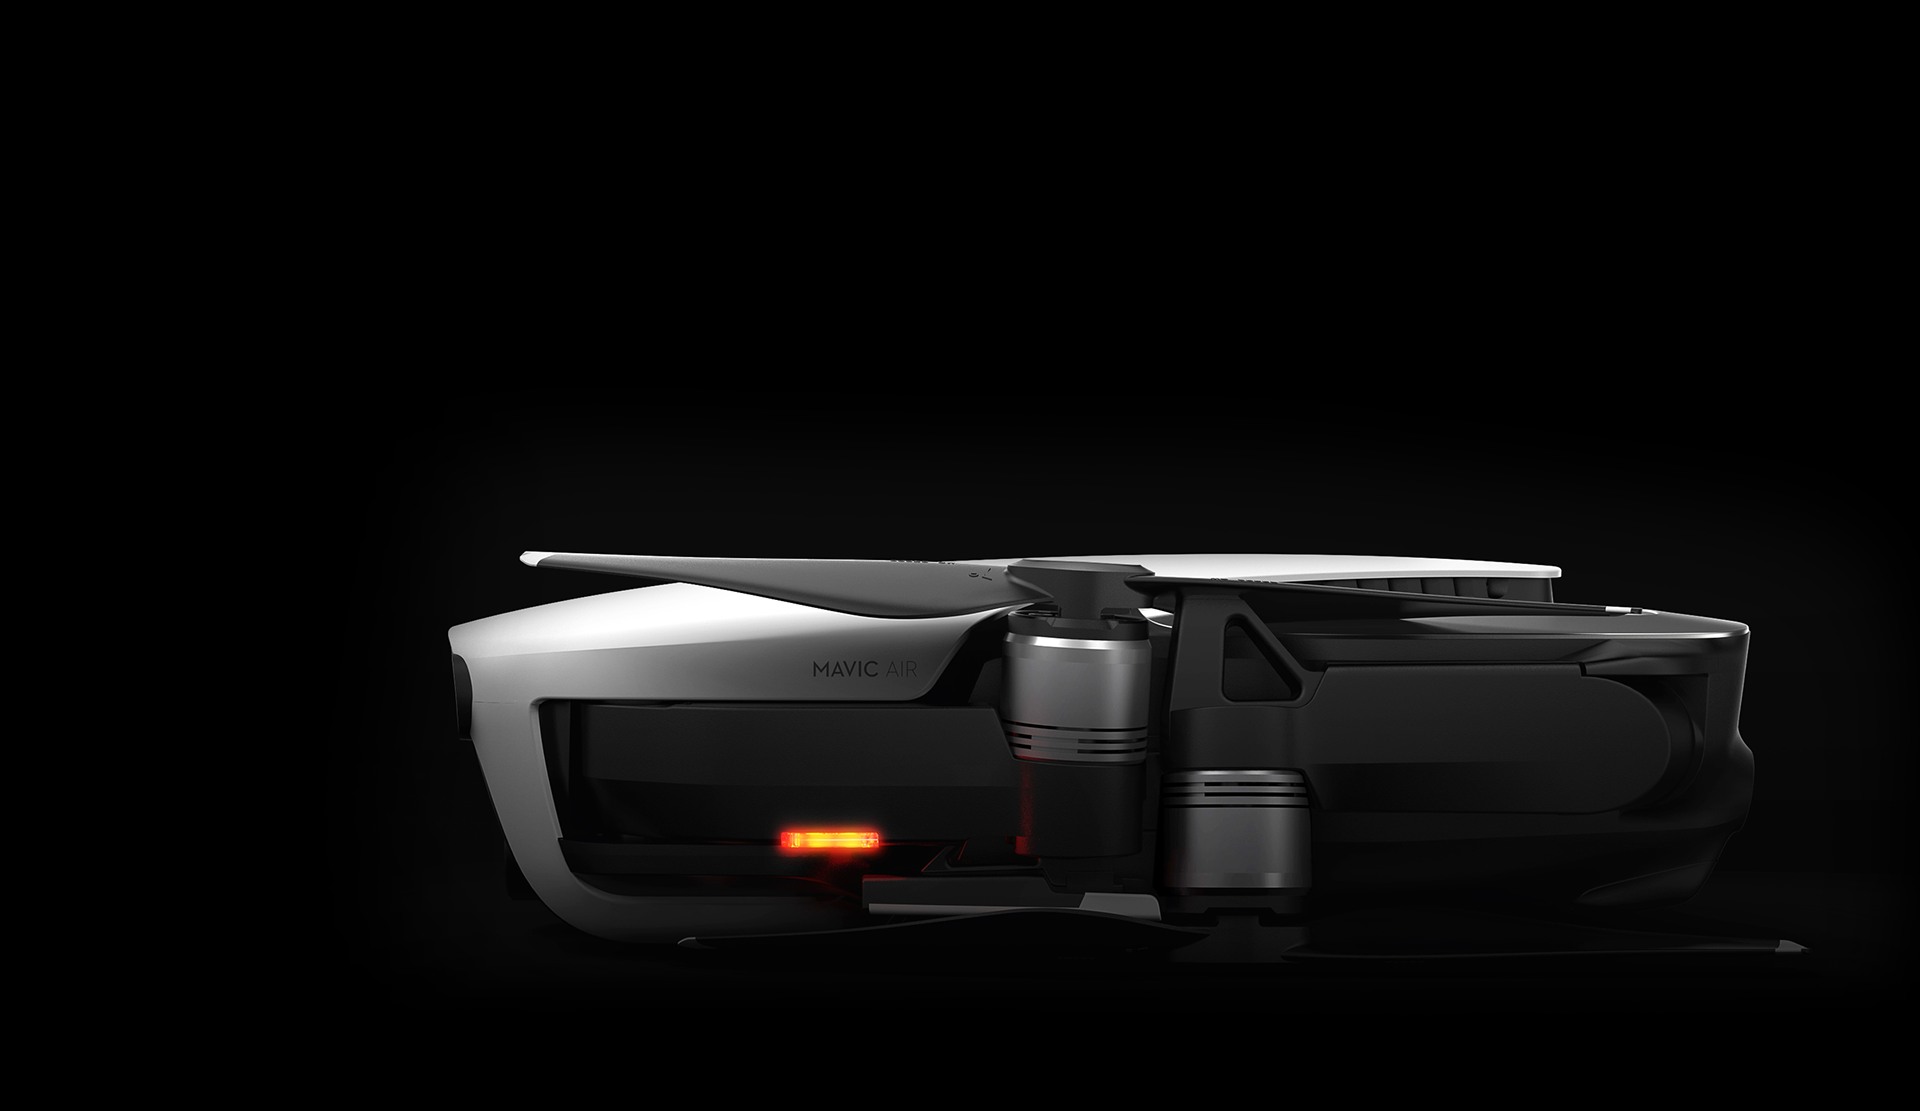 Designing the DJI Mavic Air, the foldable 4K Drone